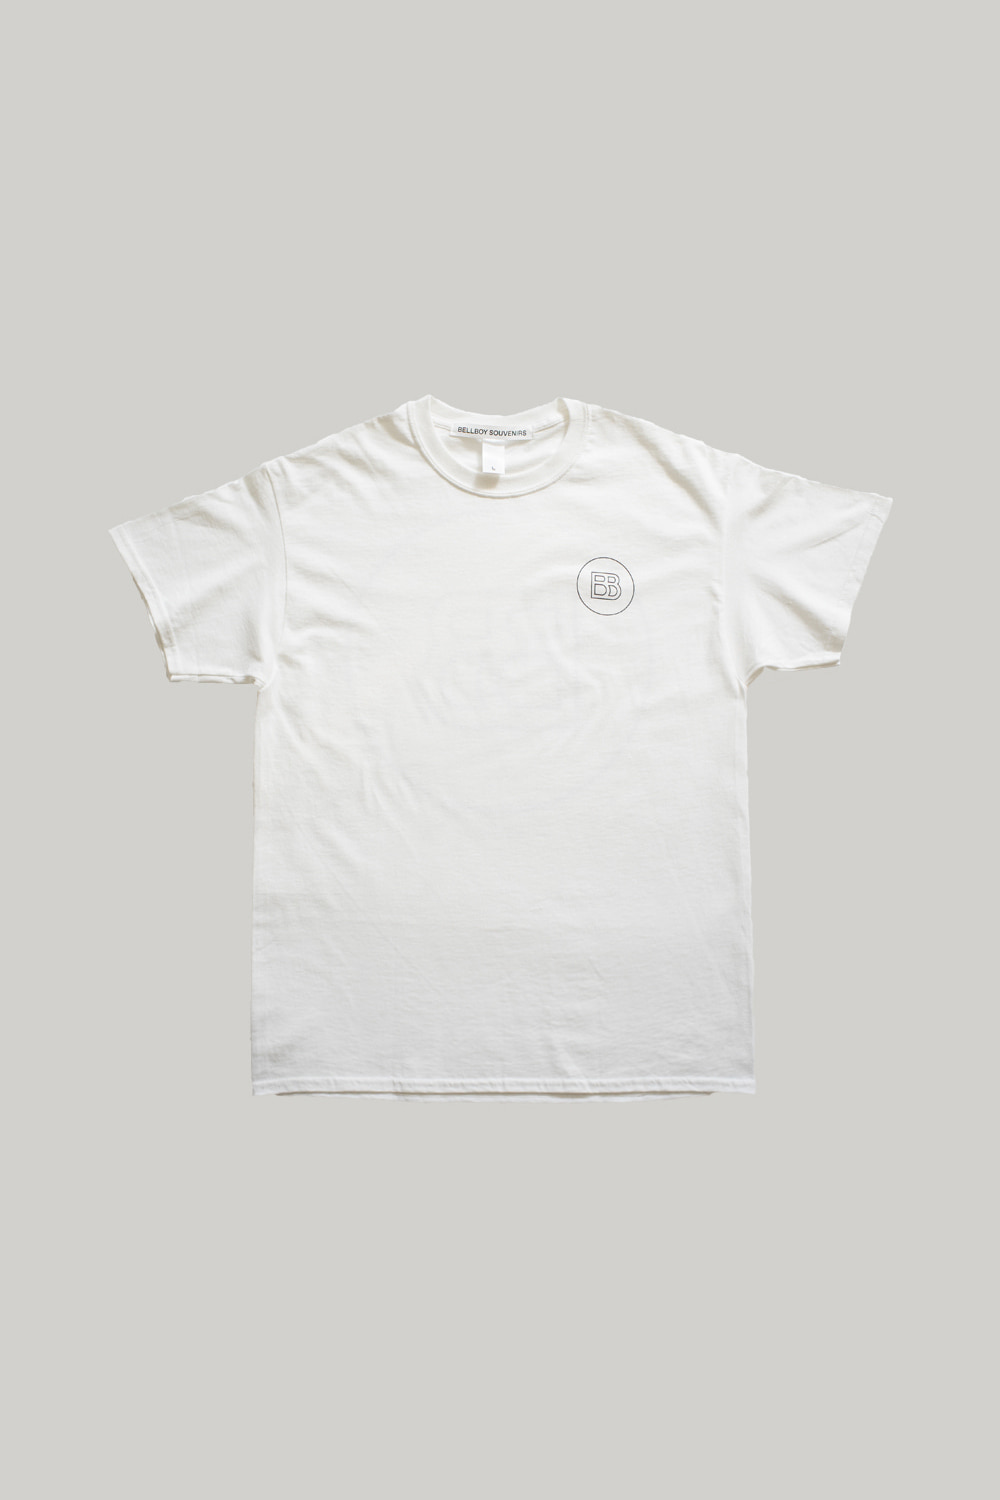 BB T-Shirts - White 티셔츠, 워시드 헤비웨이트 티셔츠, 옥스포드셔츠, 버튼다운셔츠, 메신저백, 캔버스백